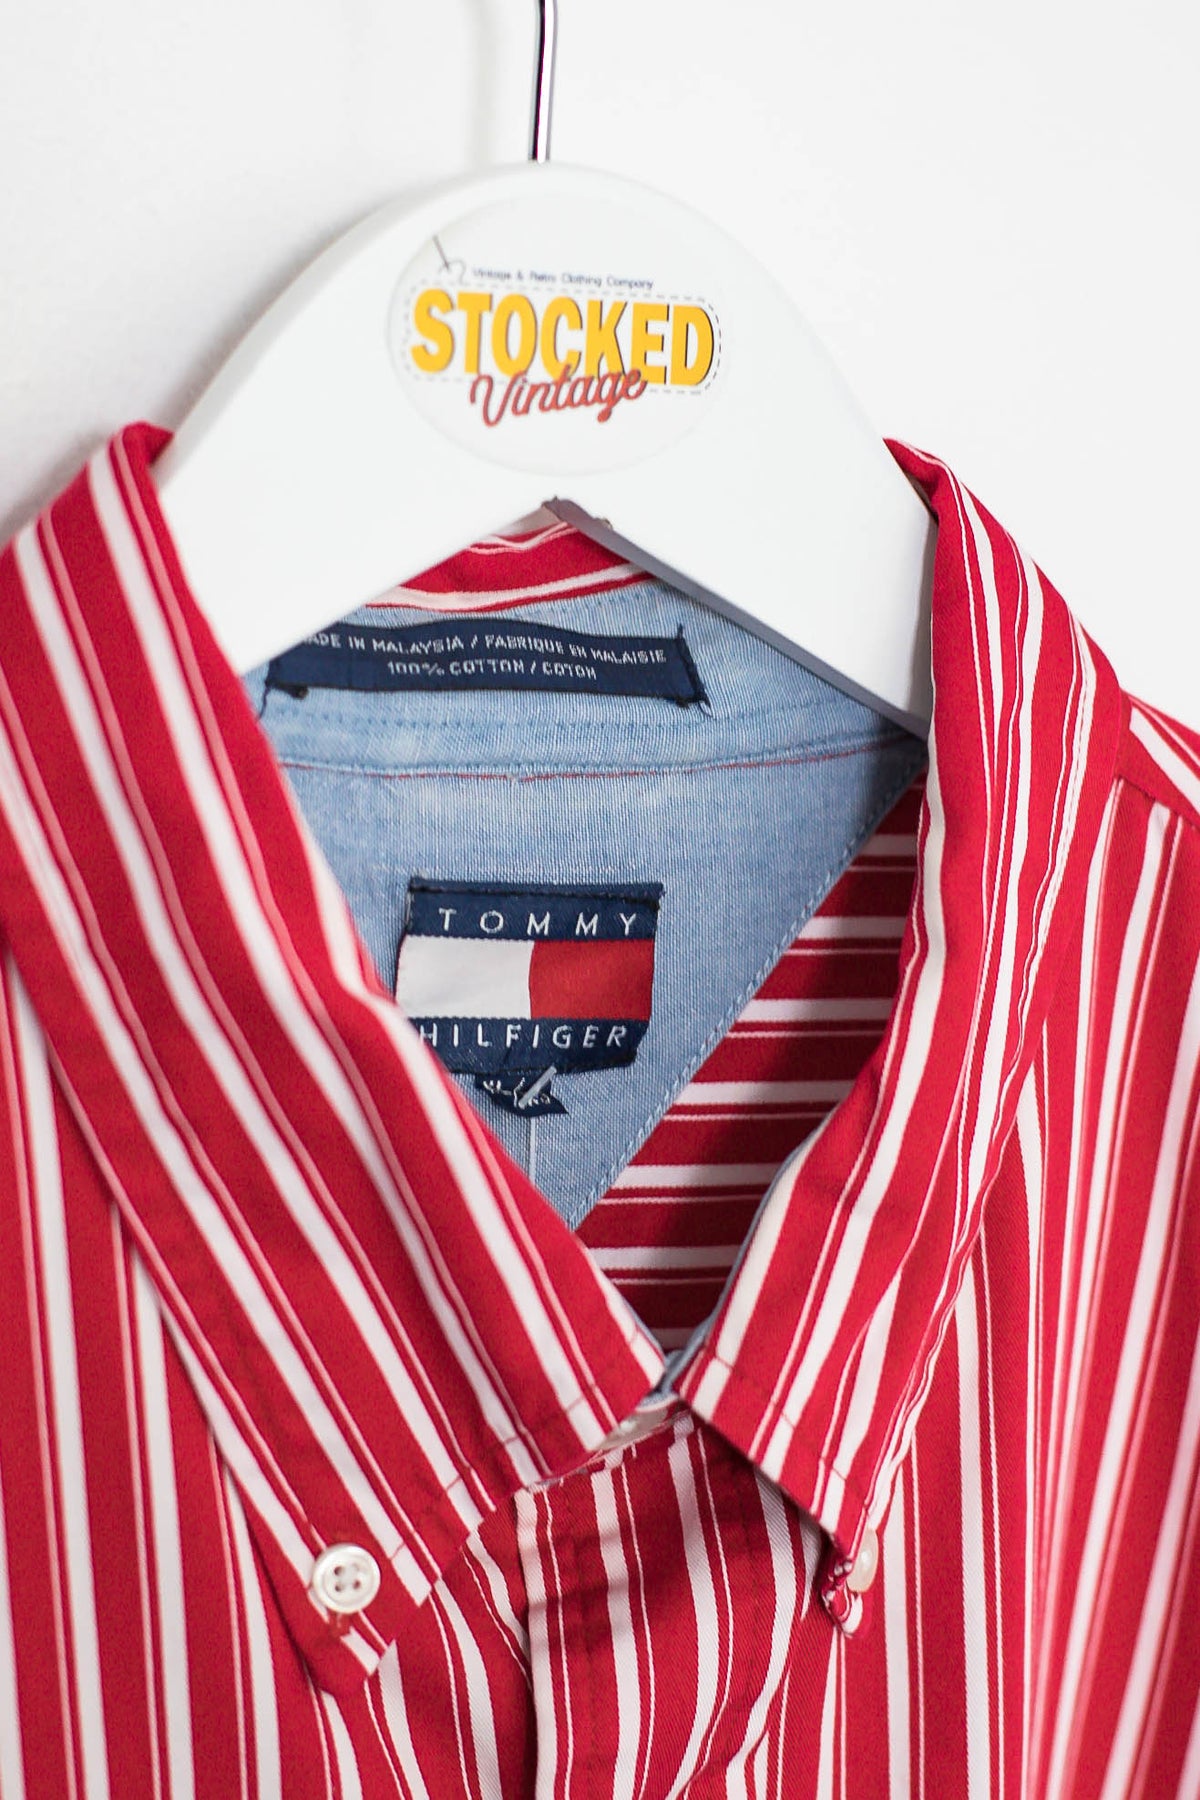 90s Tommy Hilfiger Shirt (XL)